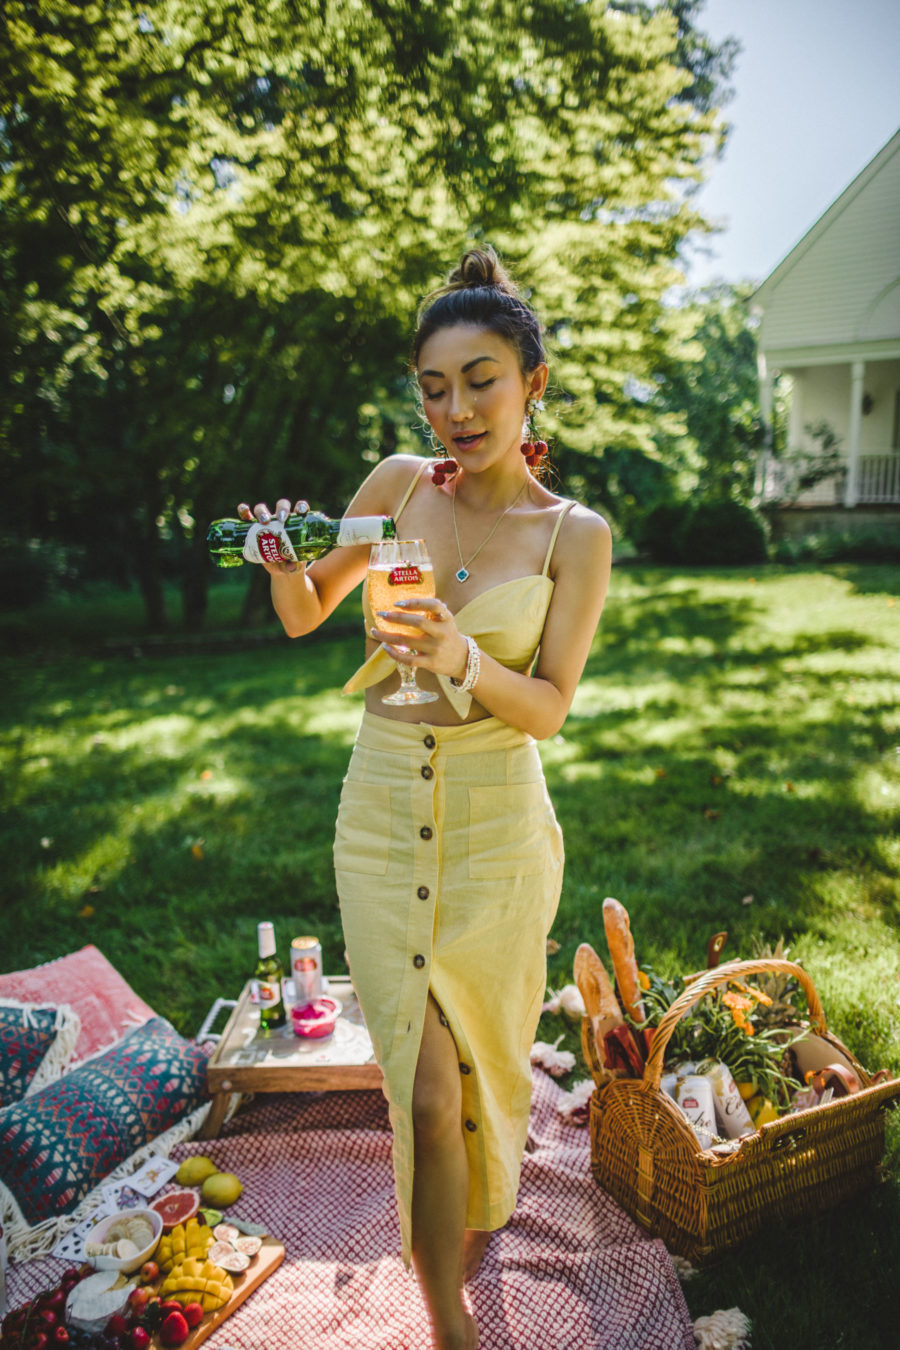 Savoring Everyday Moments with Stella Artois, Joie de Biere, Outdoor Picnic, Summer picnic, Stella Artois // Notjessfashion.com